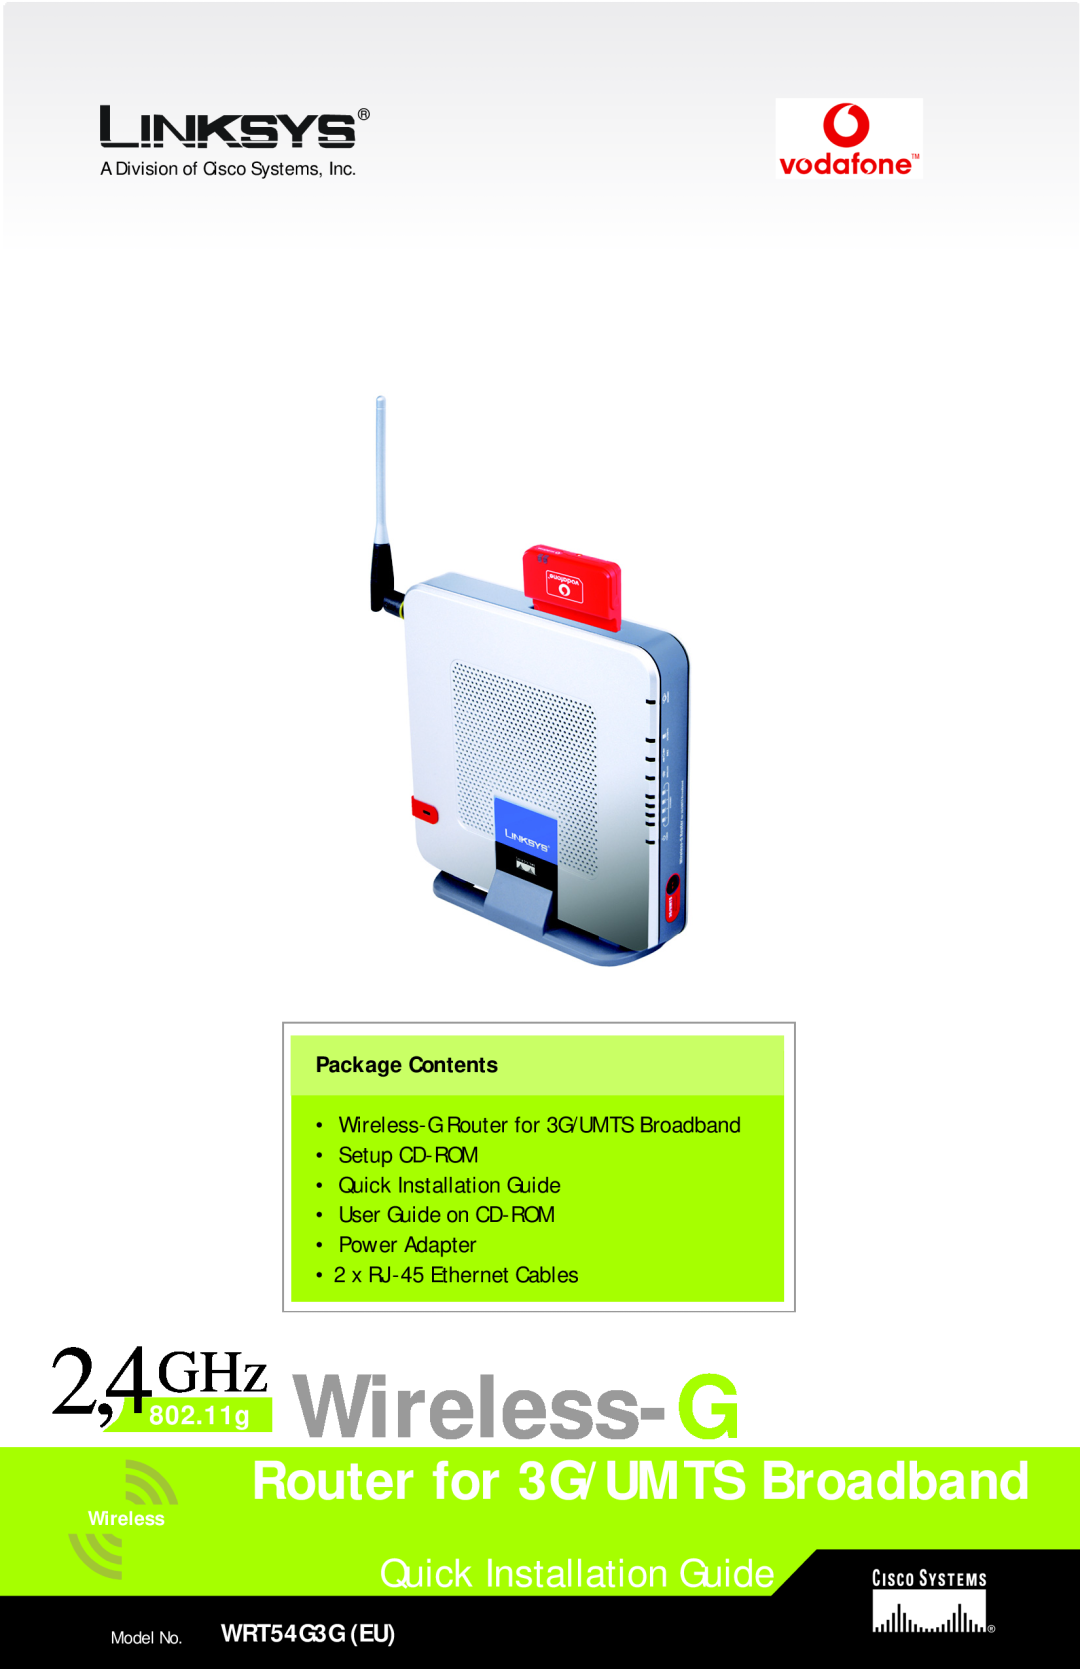 Linksys manual 2,4802GHz.11g Wireless-G, Router for 3G/UMTS Broadband, Quick Installation Guide, WRT54G3G EU, Model No 